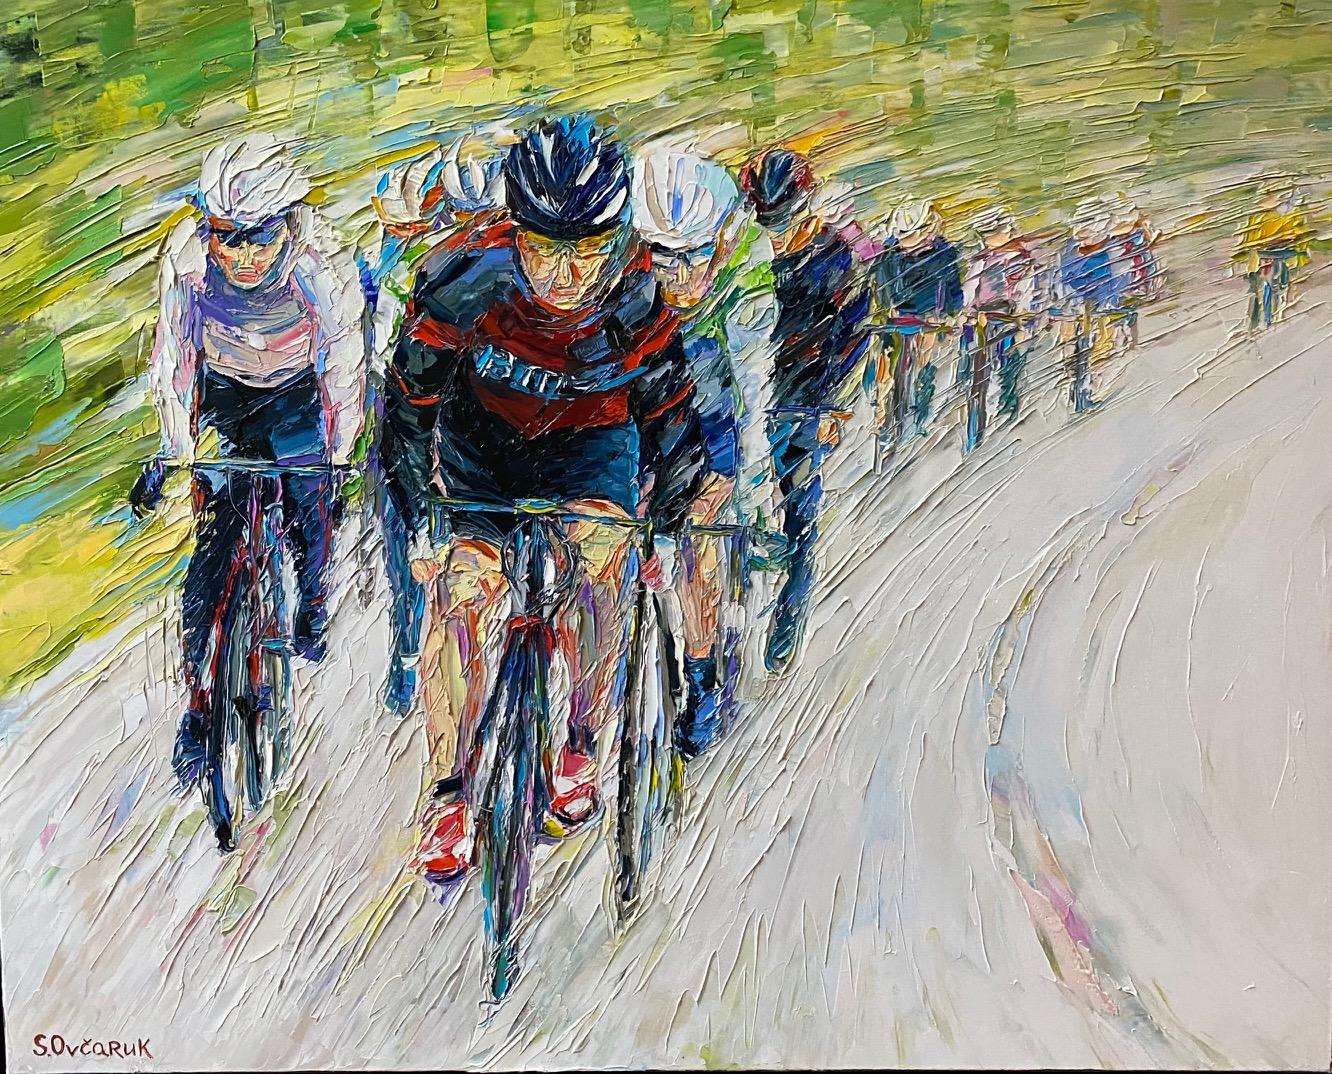 Tour de France, original 32x39 expressionist figurative landscape - Painting by Serge Ovcaruk